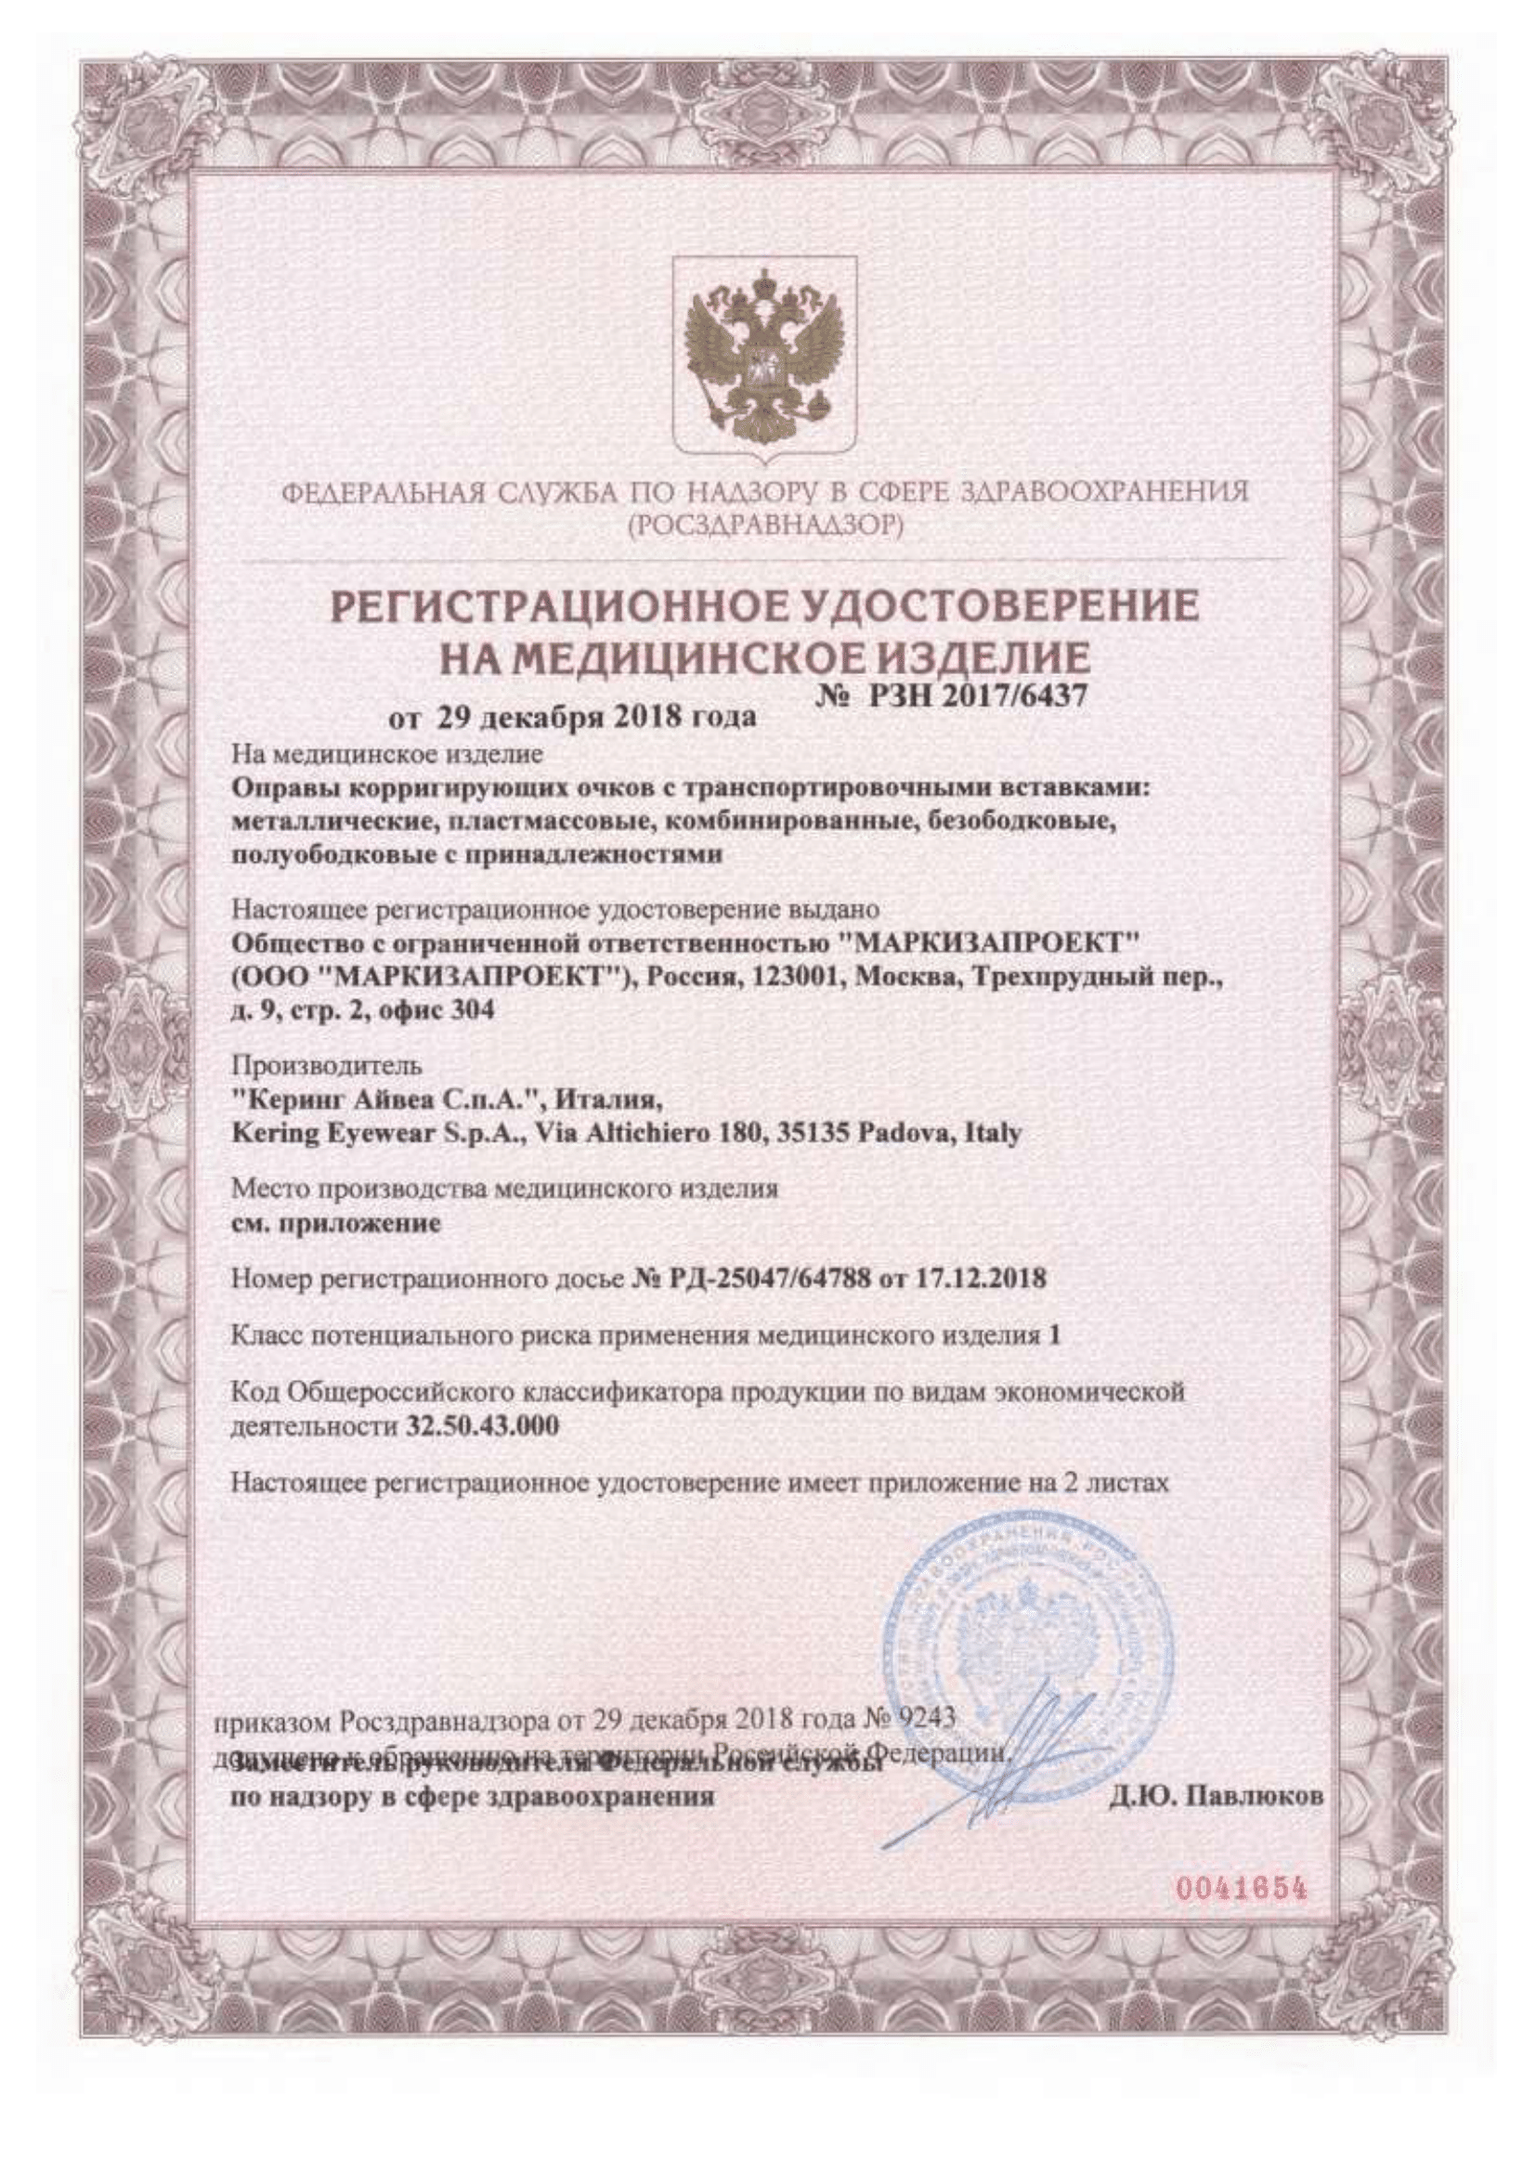 /images/certificates/sertificate4-12.png